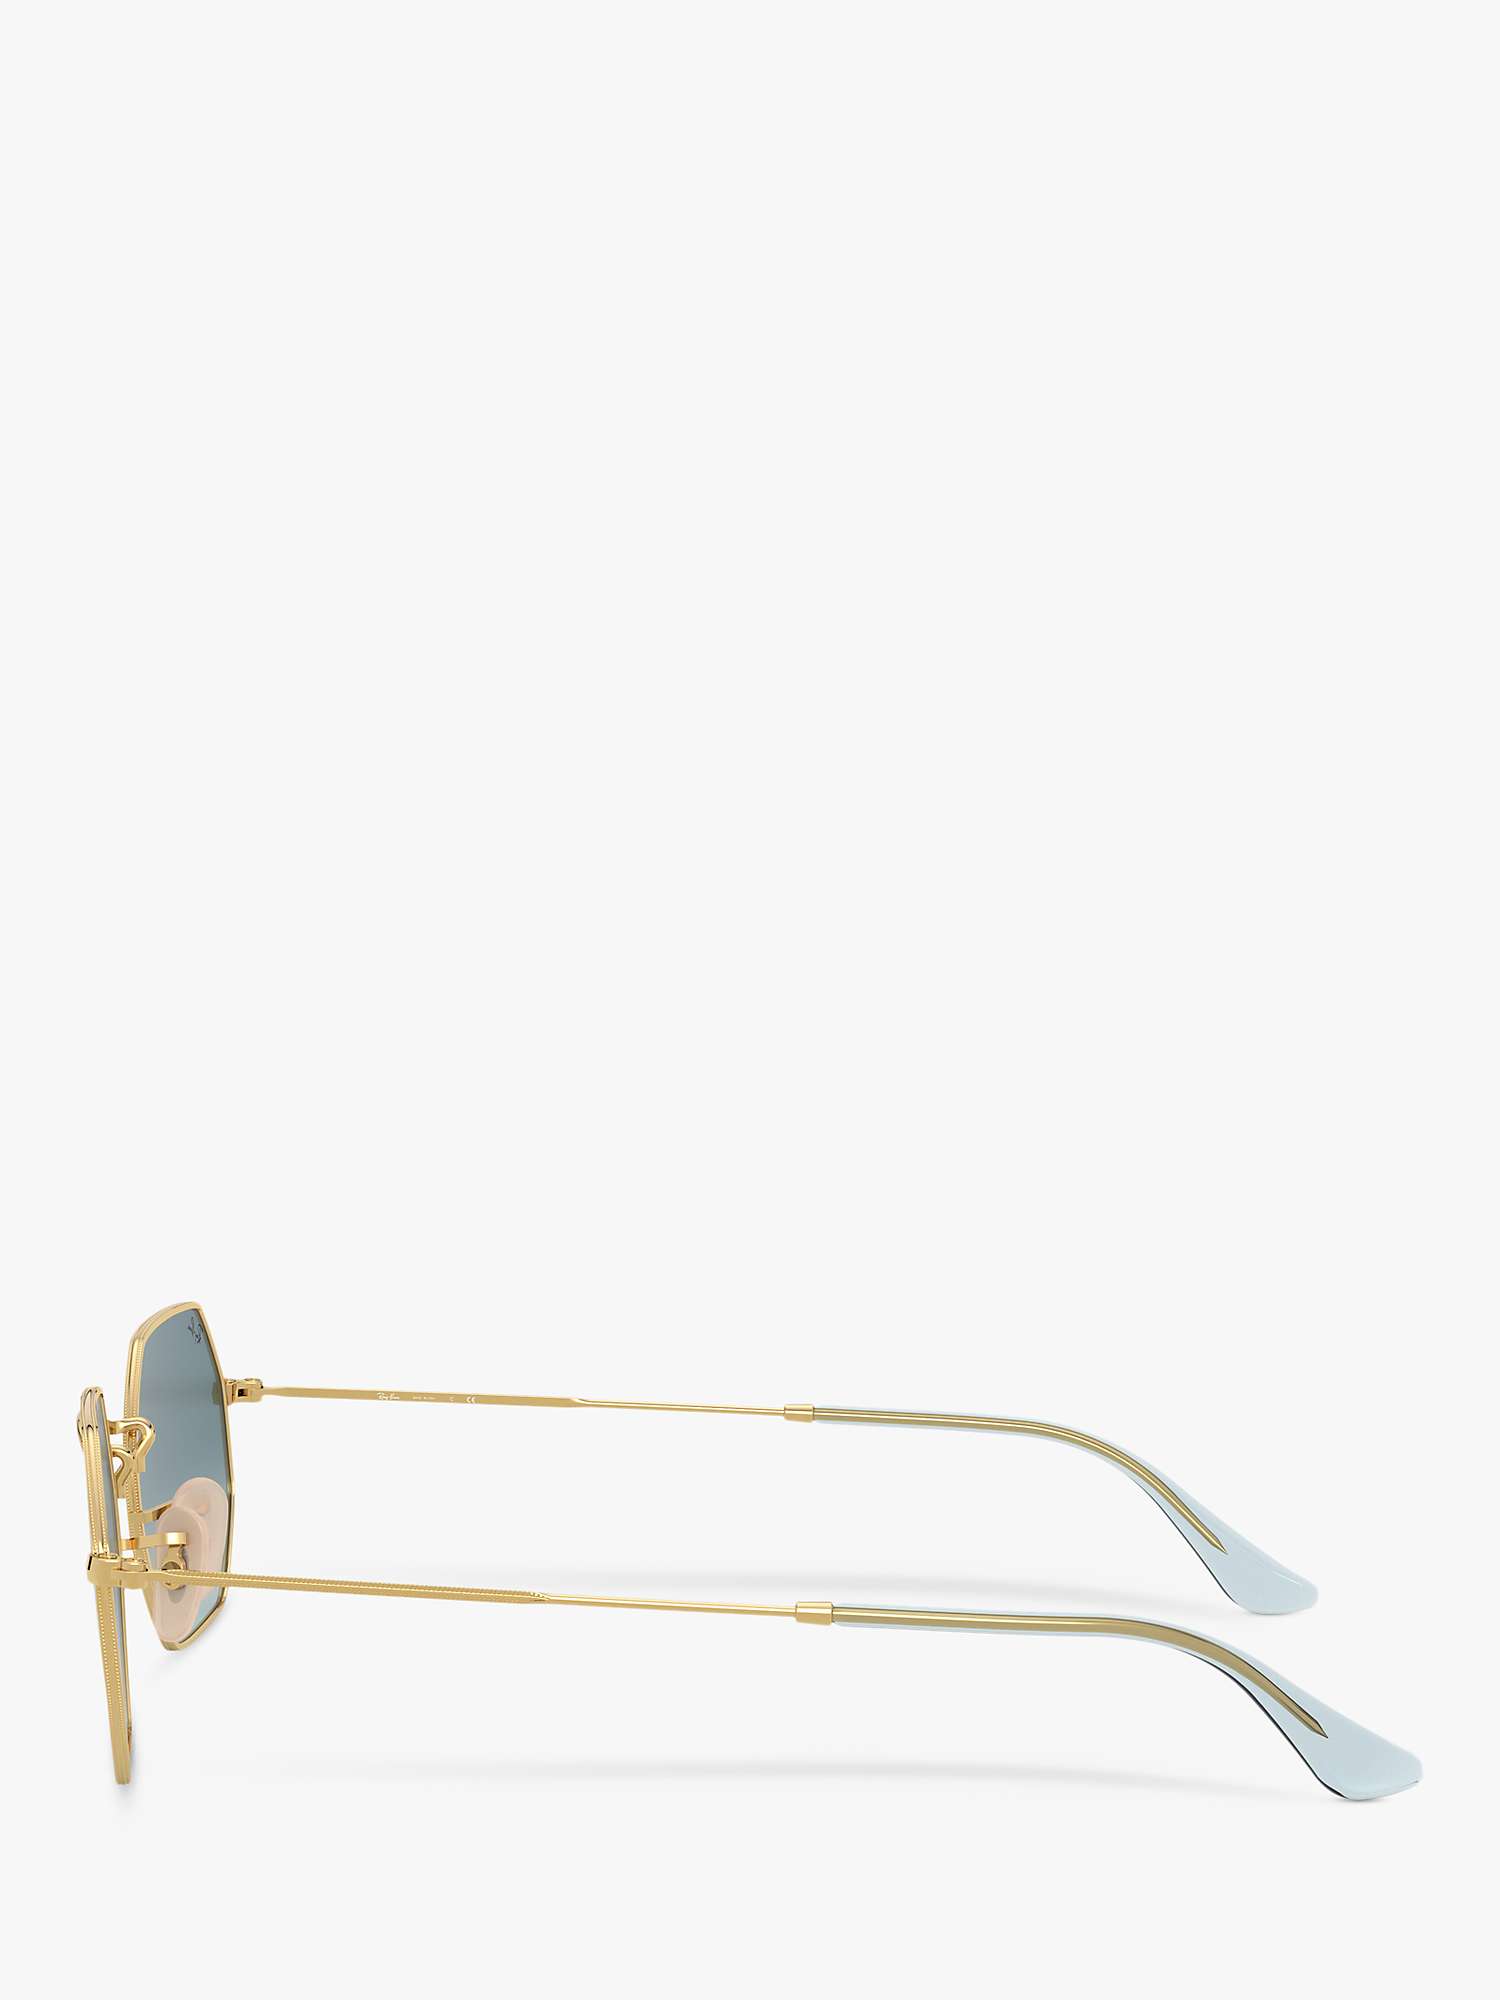 Buy Ray-Ban RB3556N Unisex Heptagonal Sunglasses, Gold/Blue Gradient Online at johnlewis.com